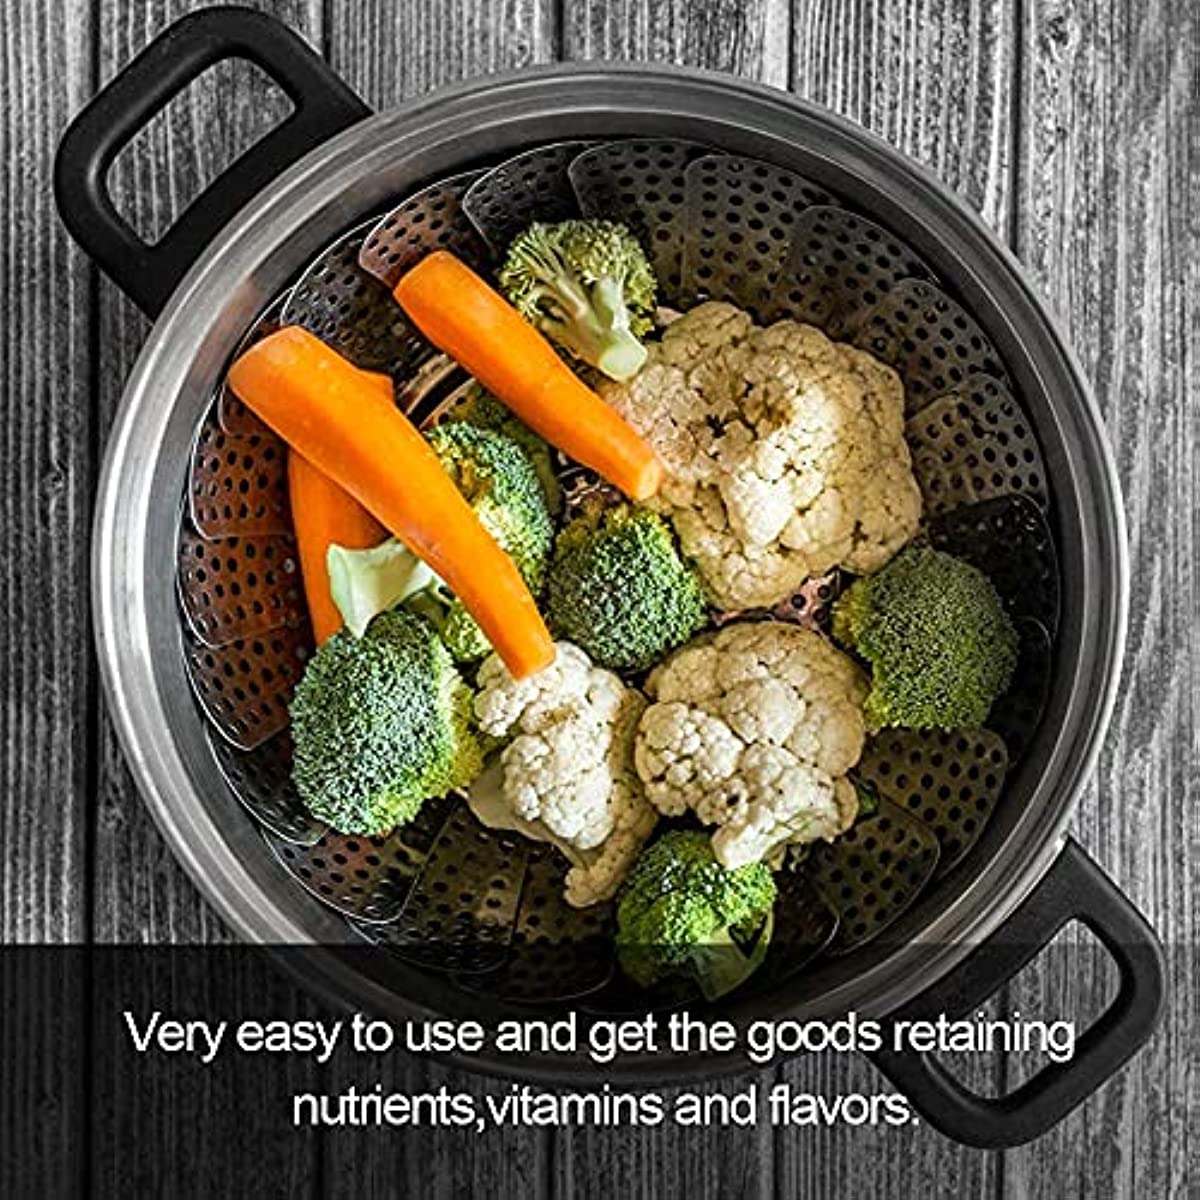 Food Steamer Basket, Vegetable Fruit Strainer, Stainless Steel